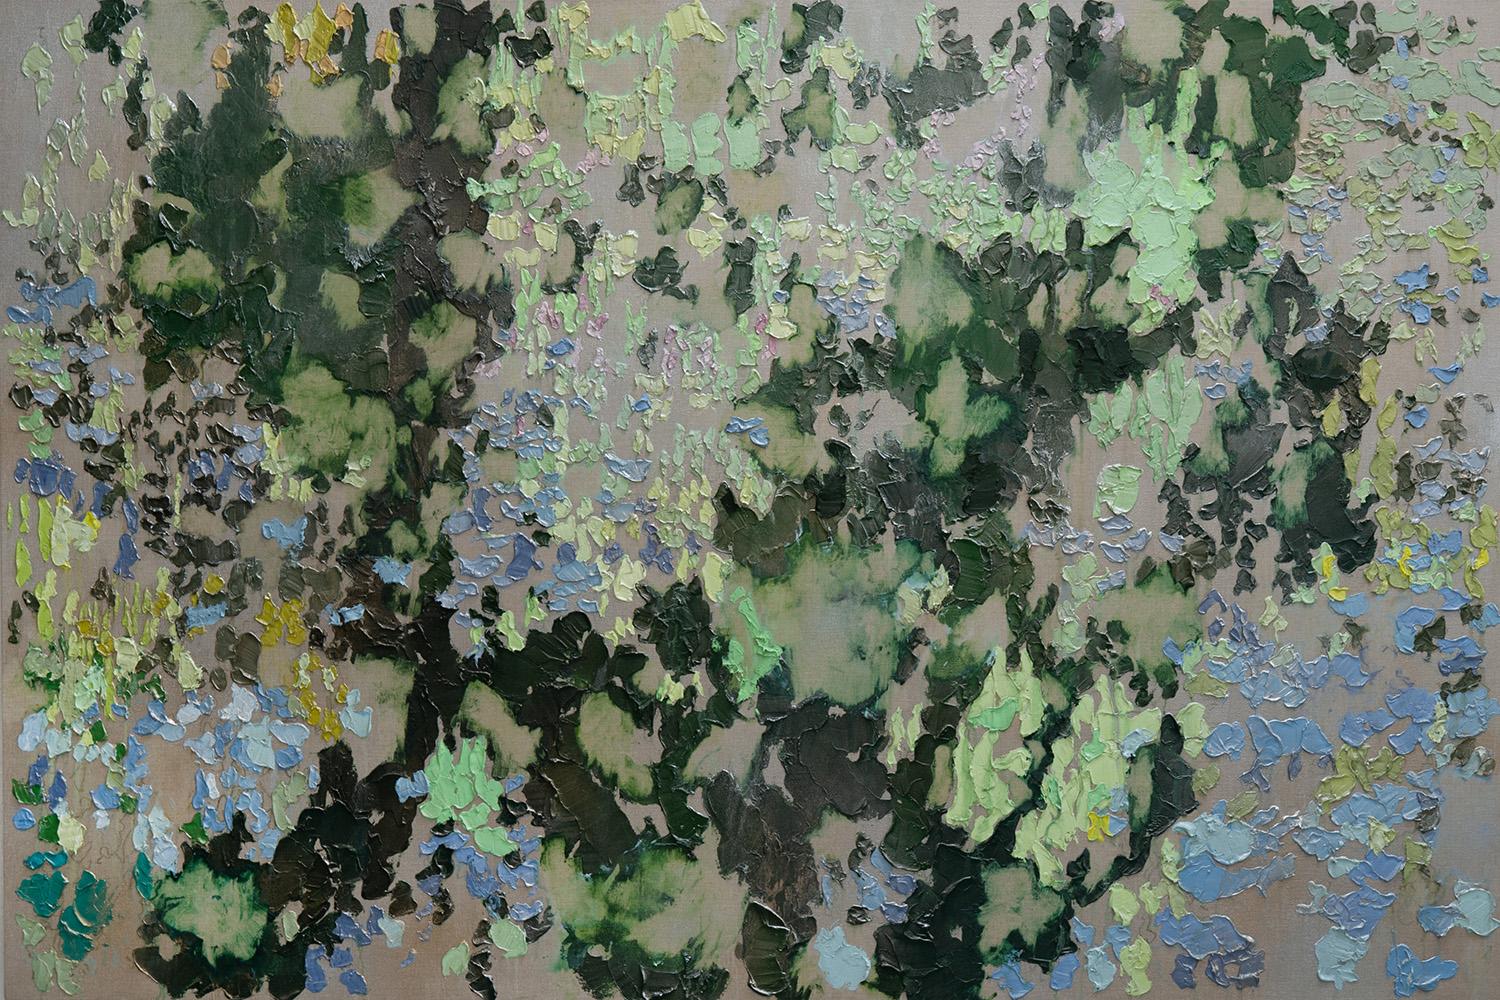 Abstract Painting BRENDAN STUART BURNS - Blink - Contemporain, huile sur lin de Brendan Burns